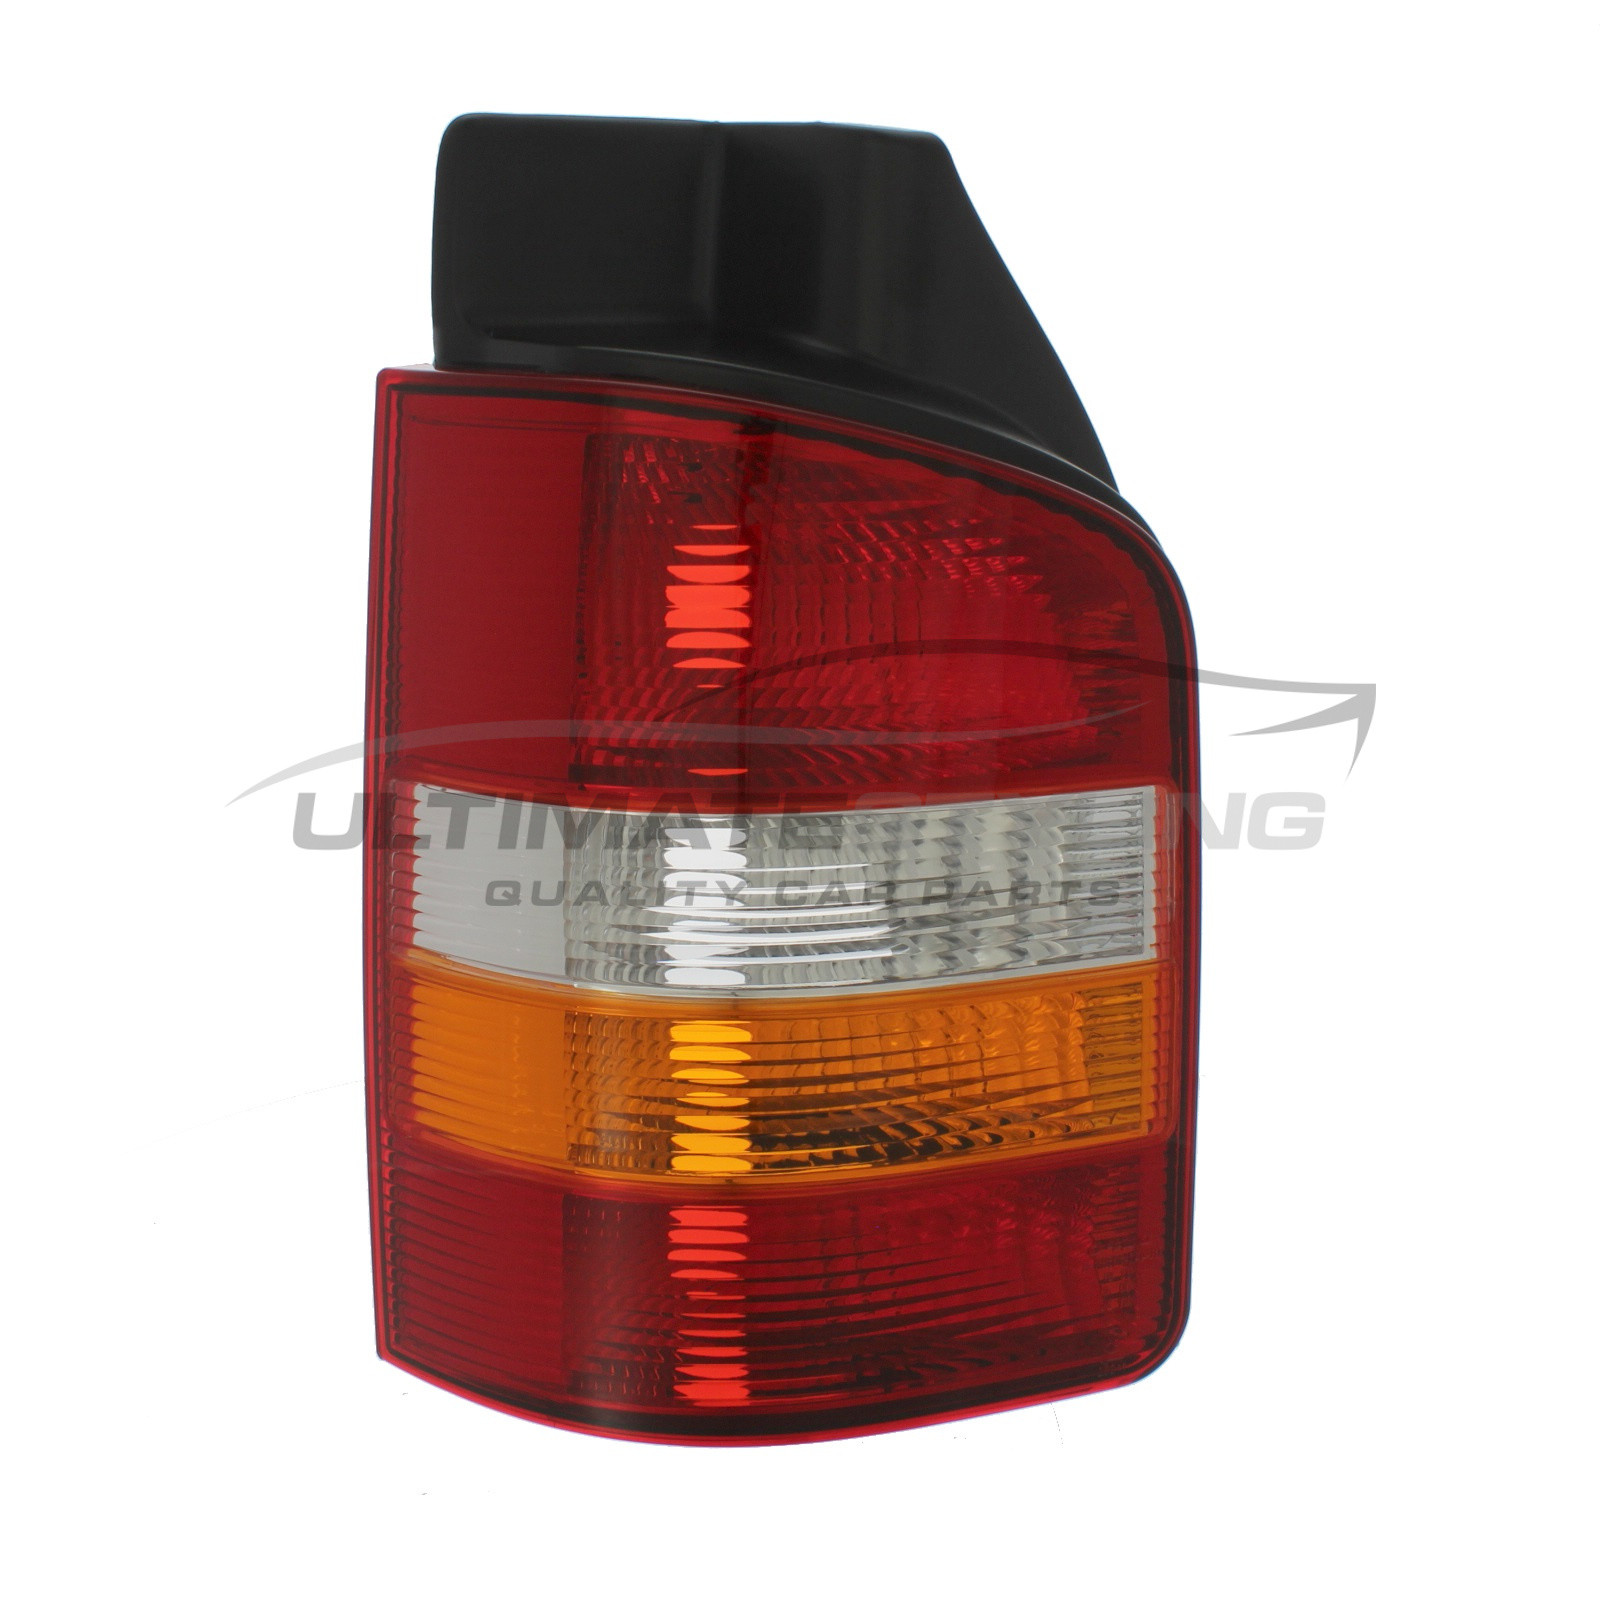 VW Transporter 2003-2010 Non-LED with Amber Indicator Rear Light / Tail Light Excluding Bulb Holder Passenger Side (LH)